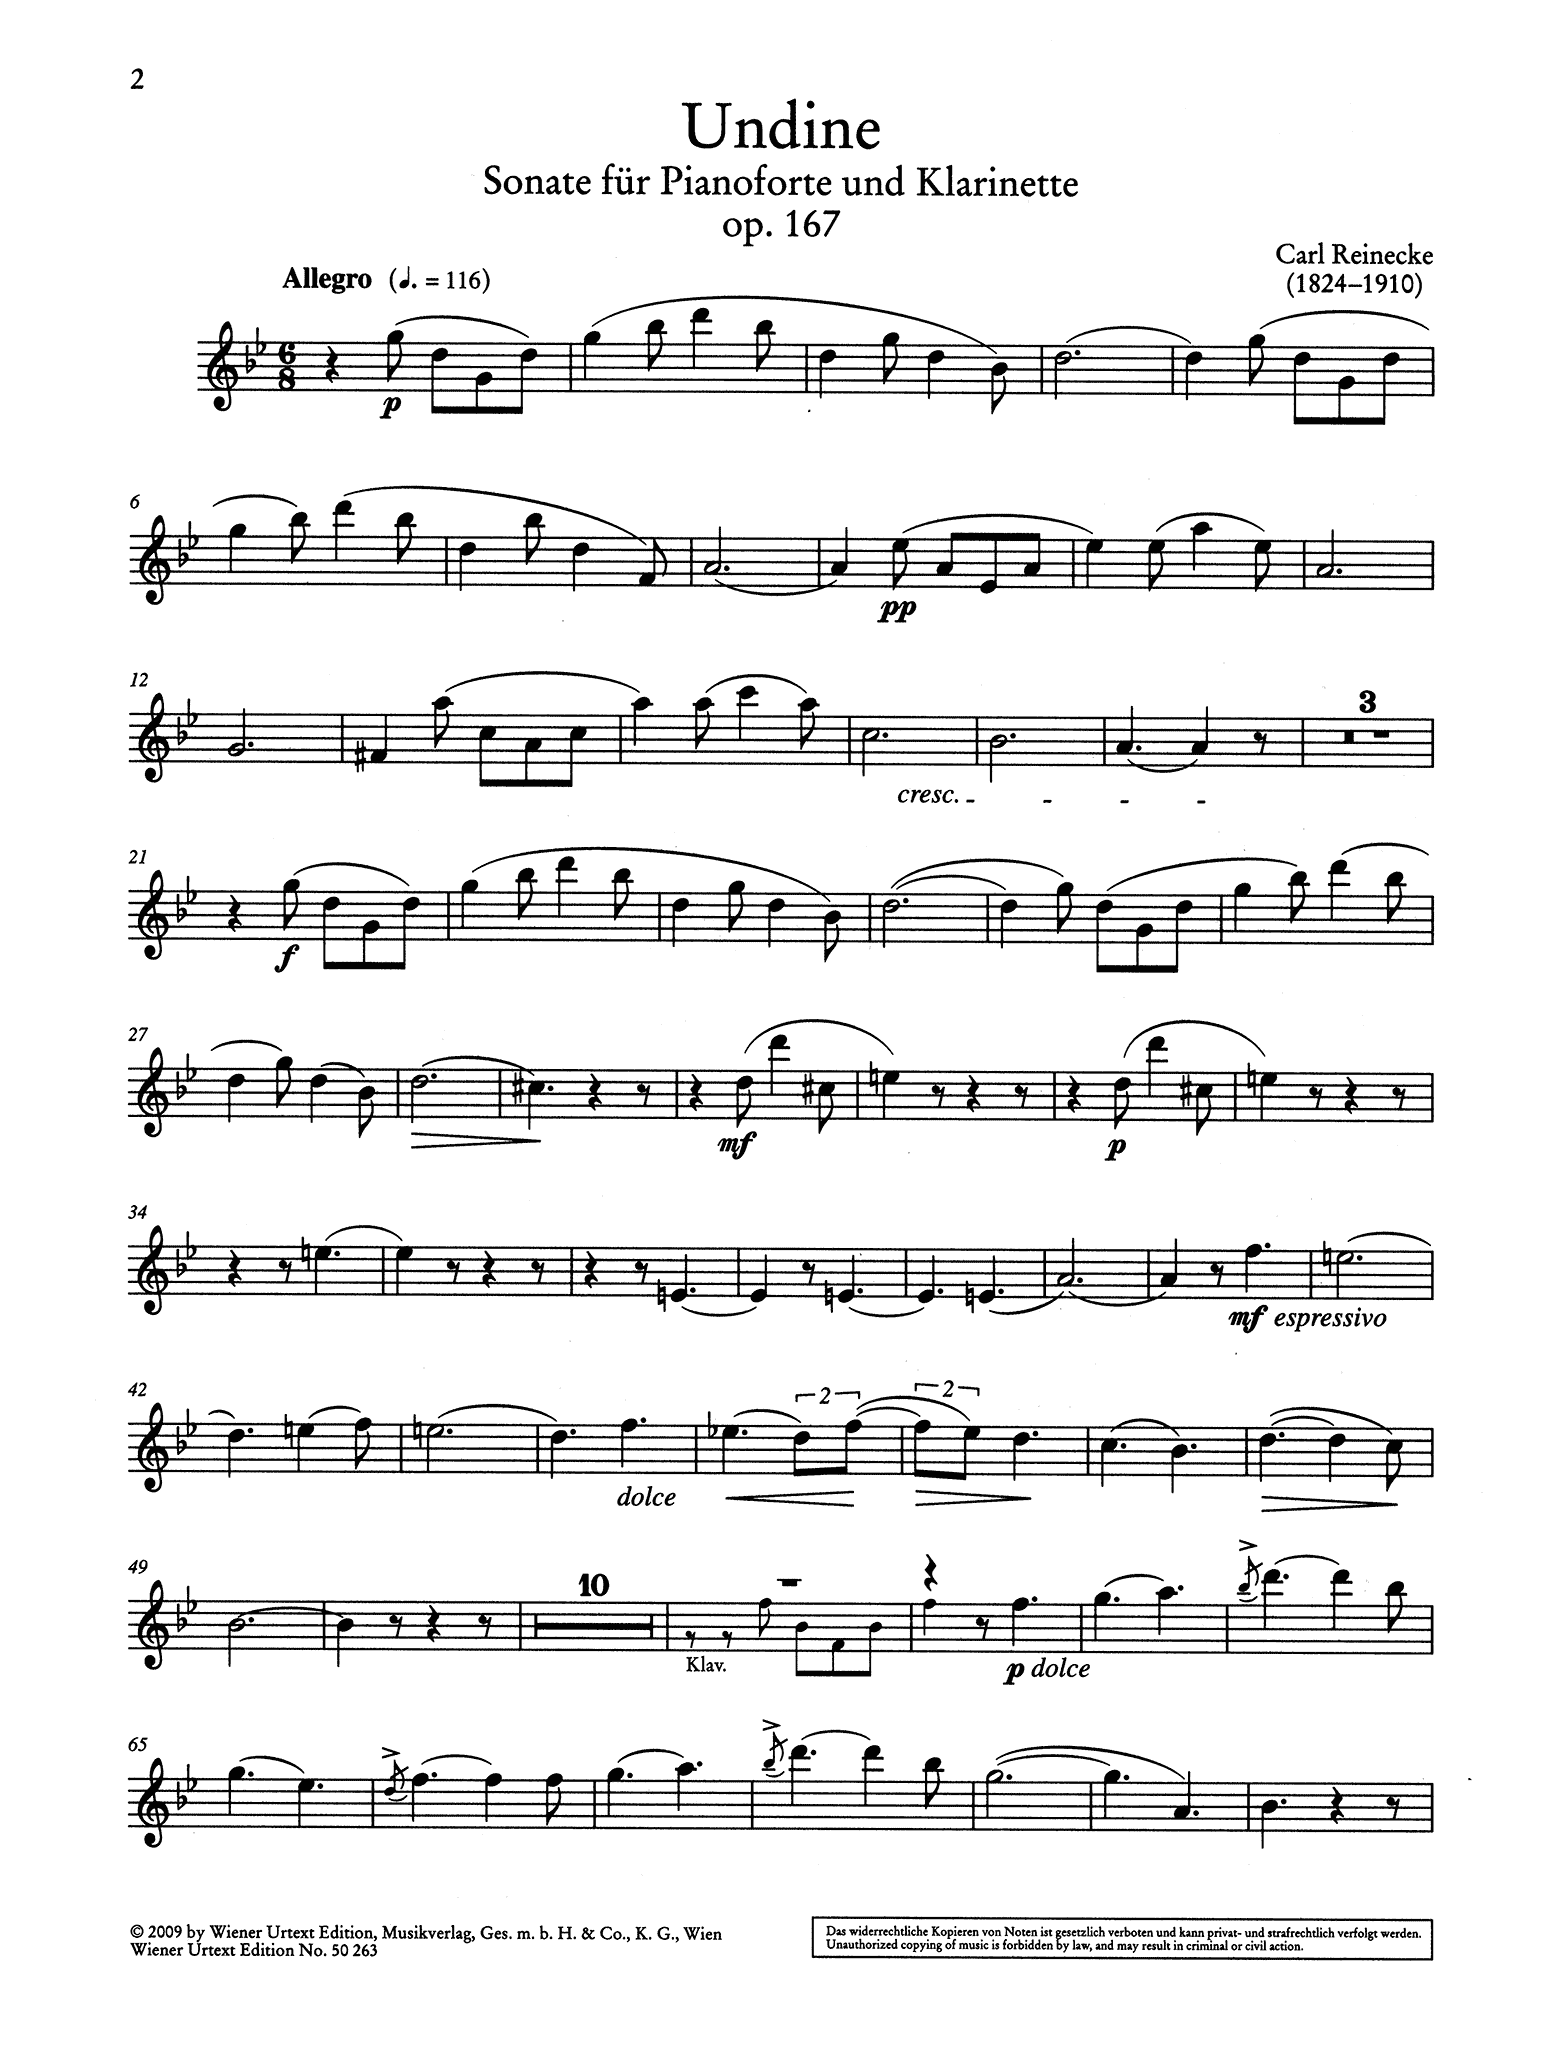 Sonata for Clarinet & Piano, Op. 167 ‘Undine’ Clarinet part